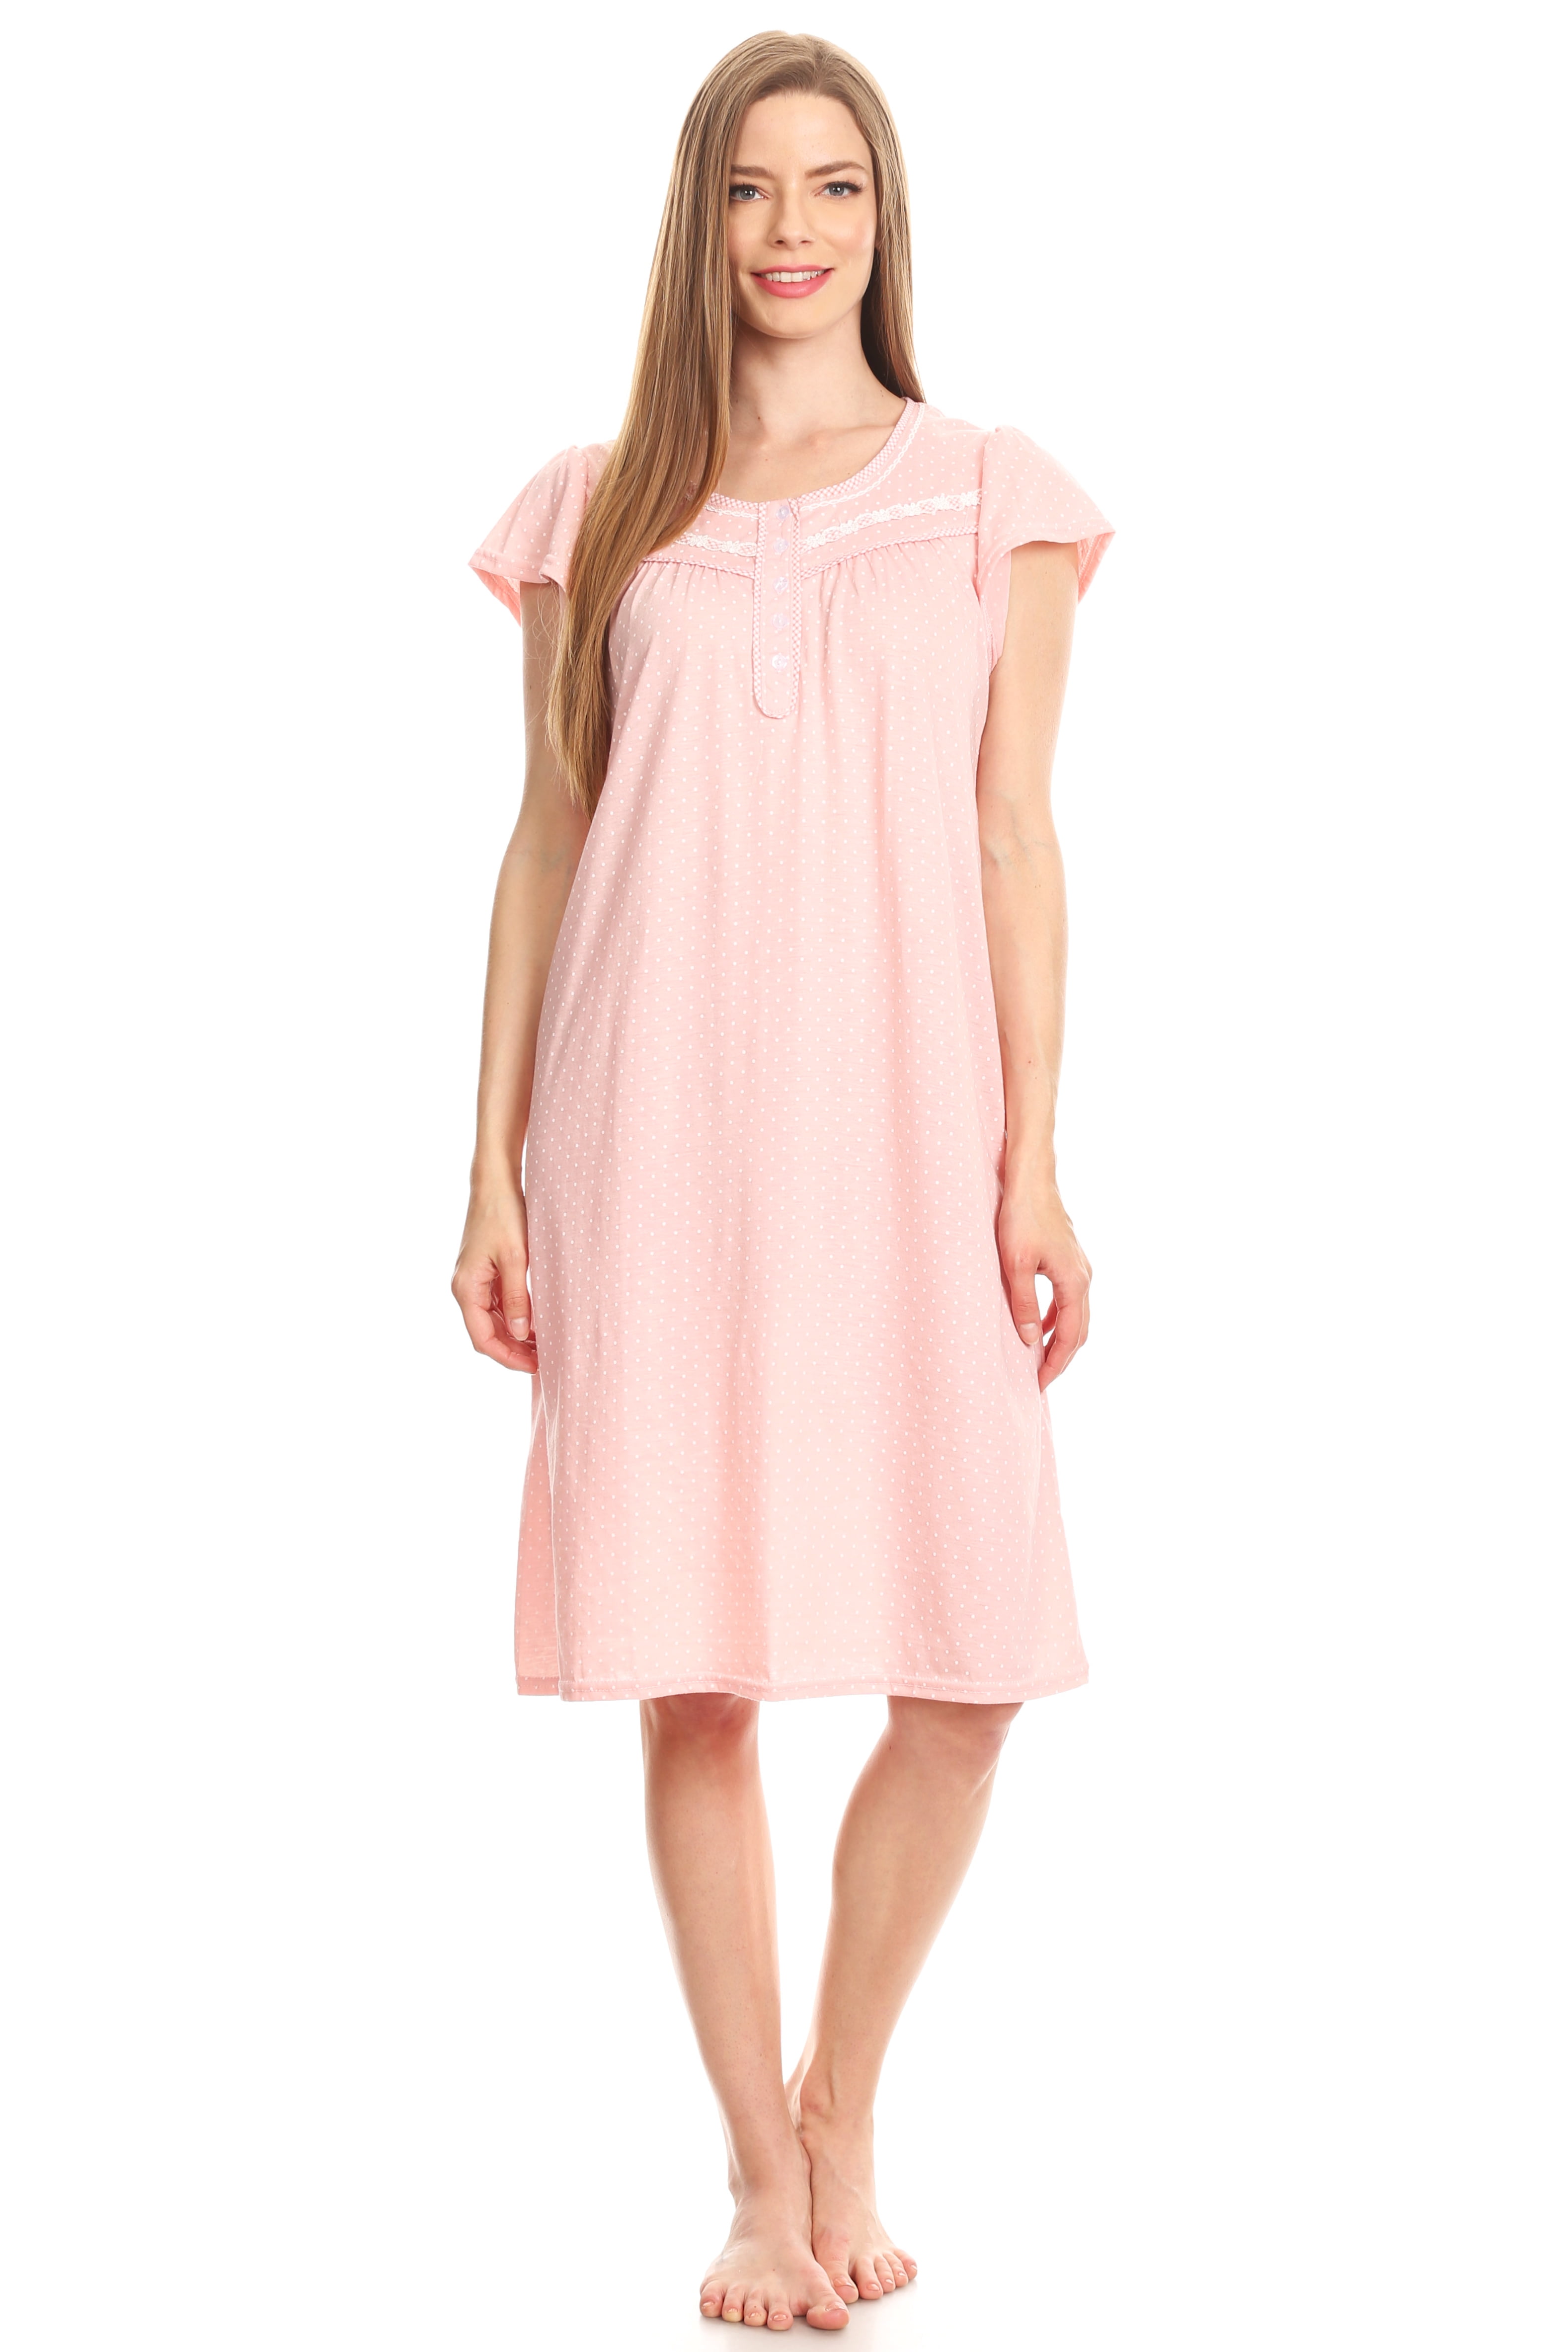 Premiere Fashion - 00131 Women Nightgown Sleepwear Pajamas Short Sleeve